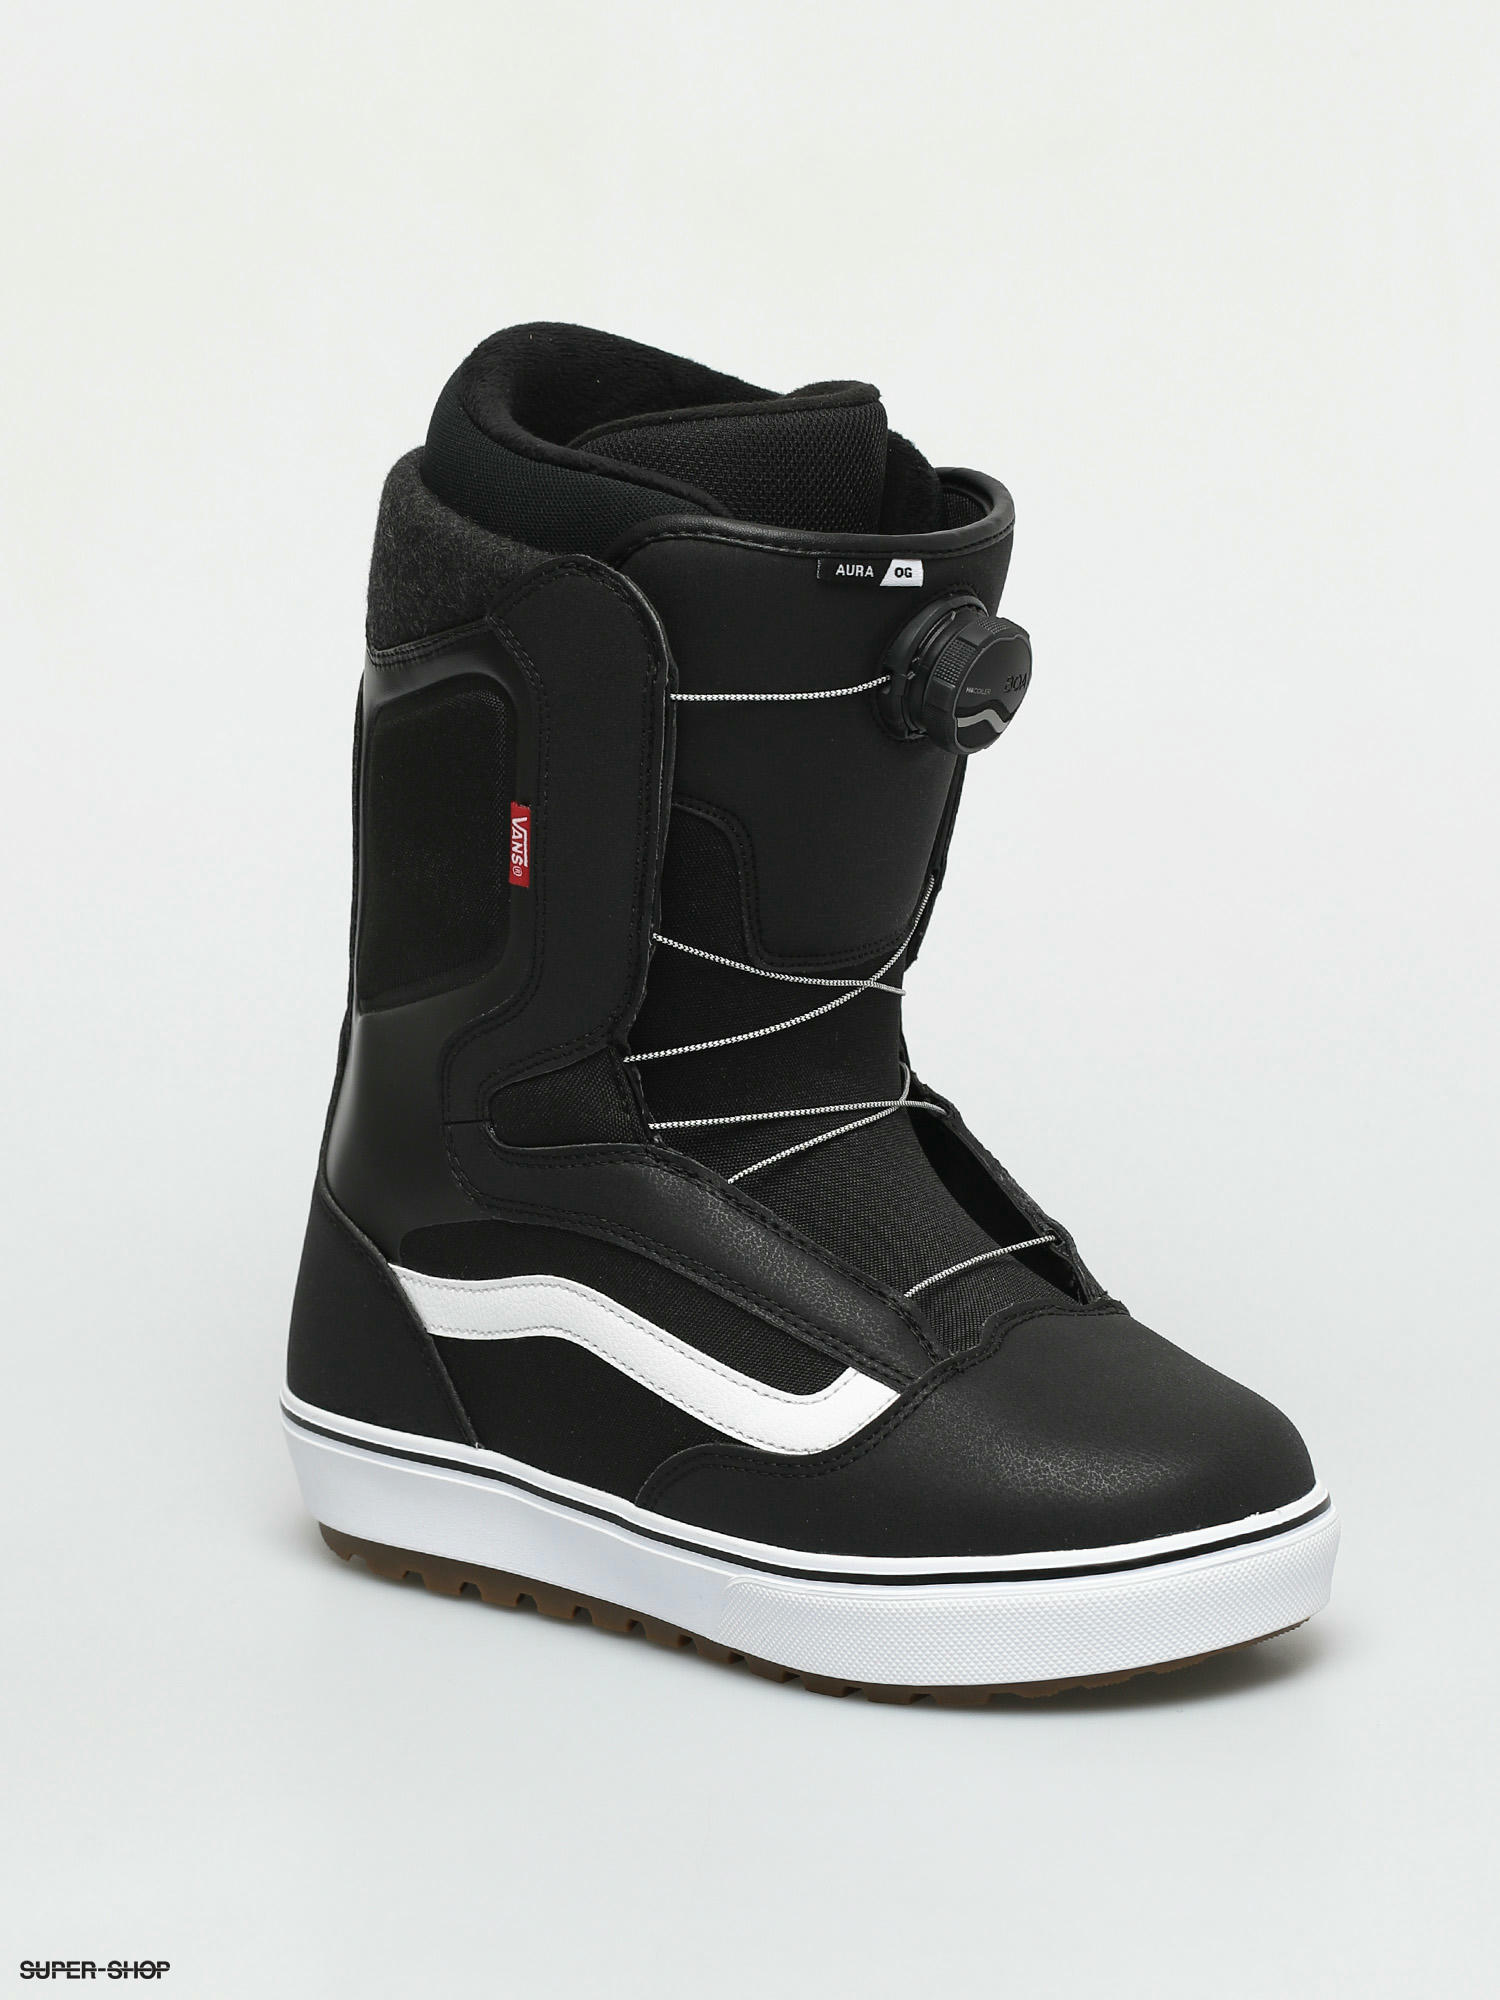 Vans Aura Og Snowboard boots (black/white)